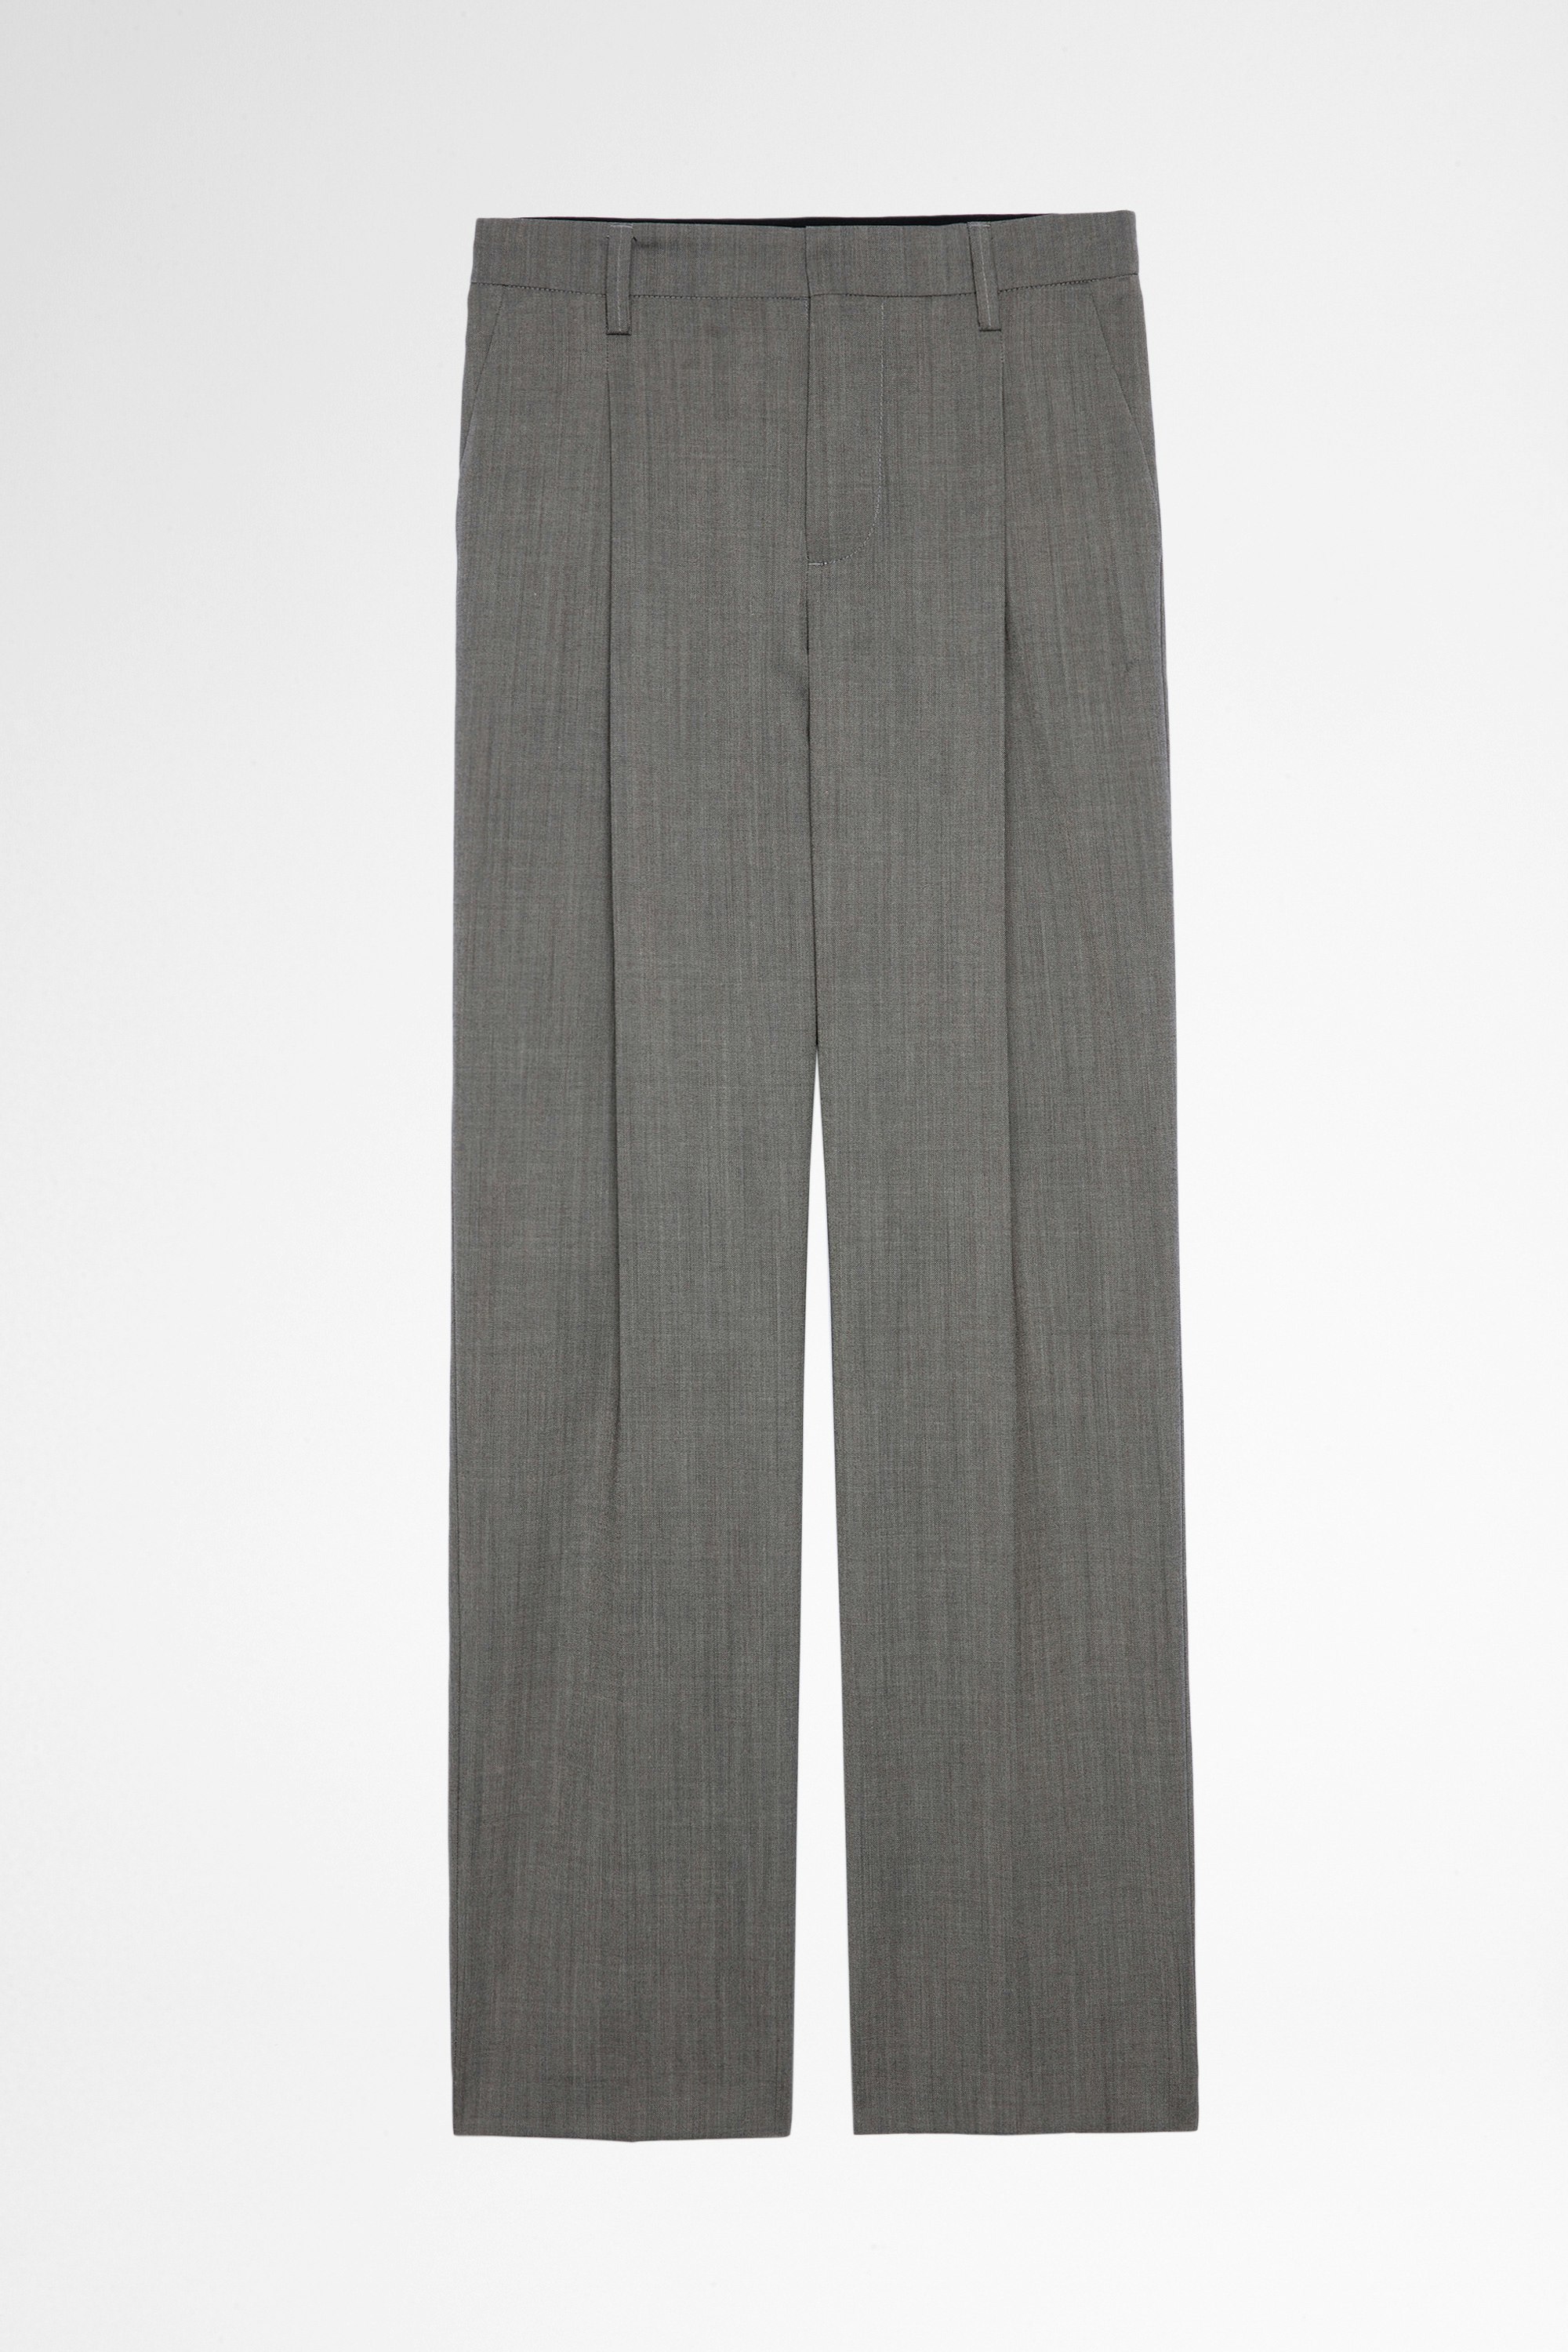 Pantalón Gitane Pantalón de traje de mujer de lana gris. Confeccionado con fibras procedentes de la agricultura ecológica.